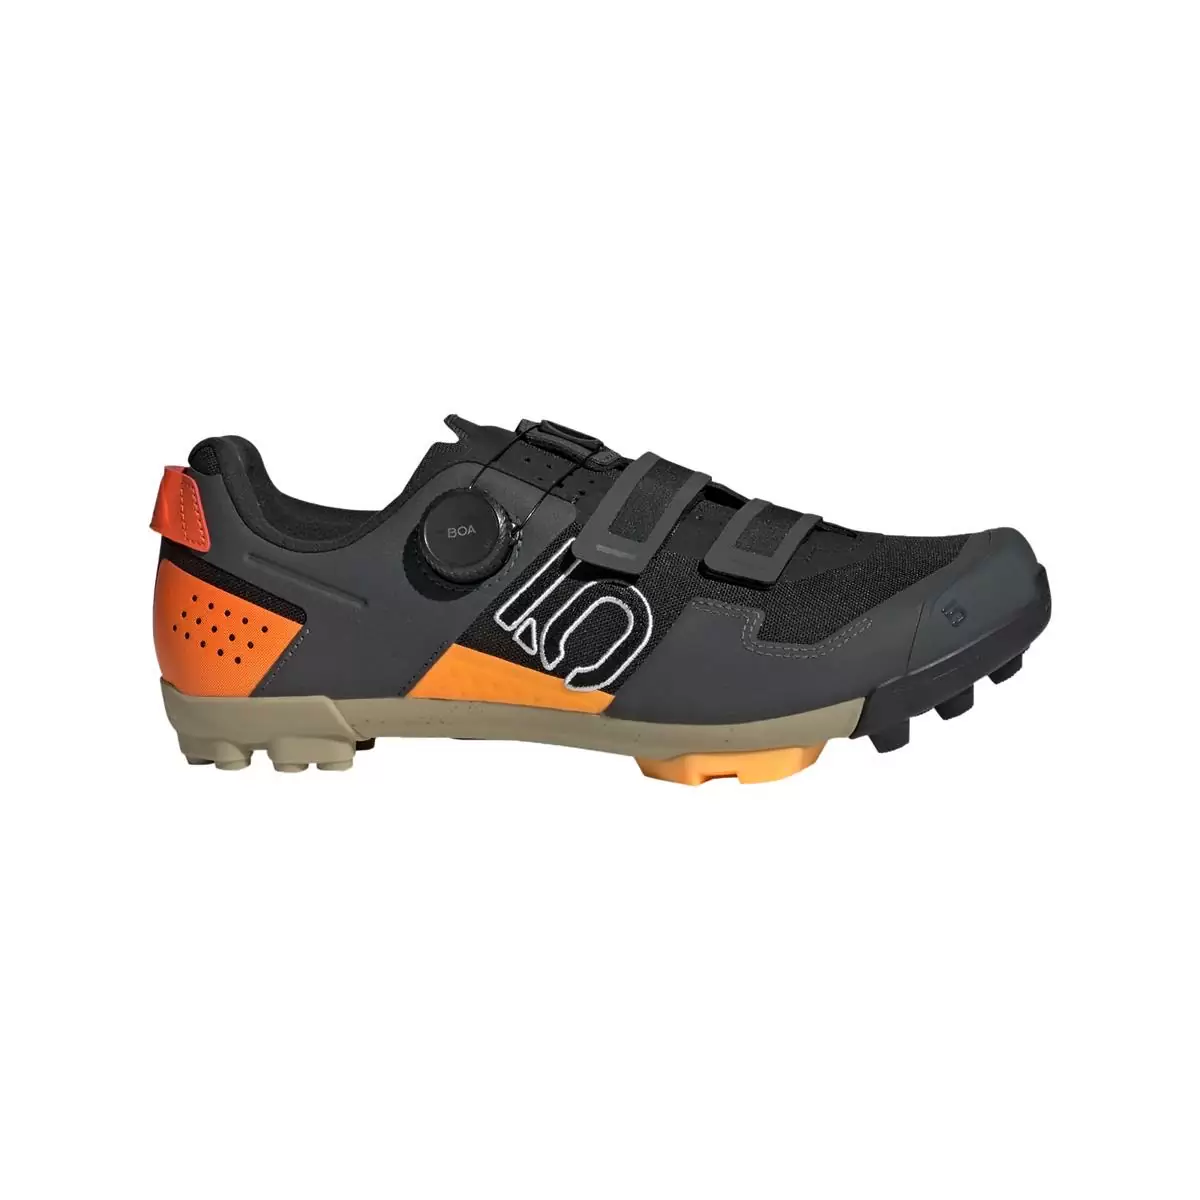 Clip 5.10 Kestrel Boa MTB Shoes Black/Orange Size 40 - image